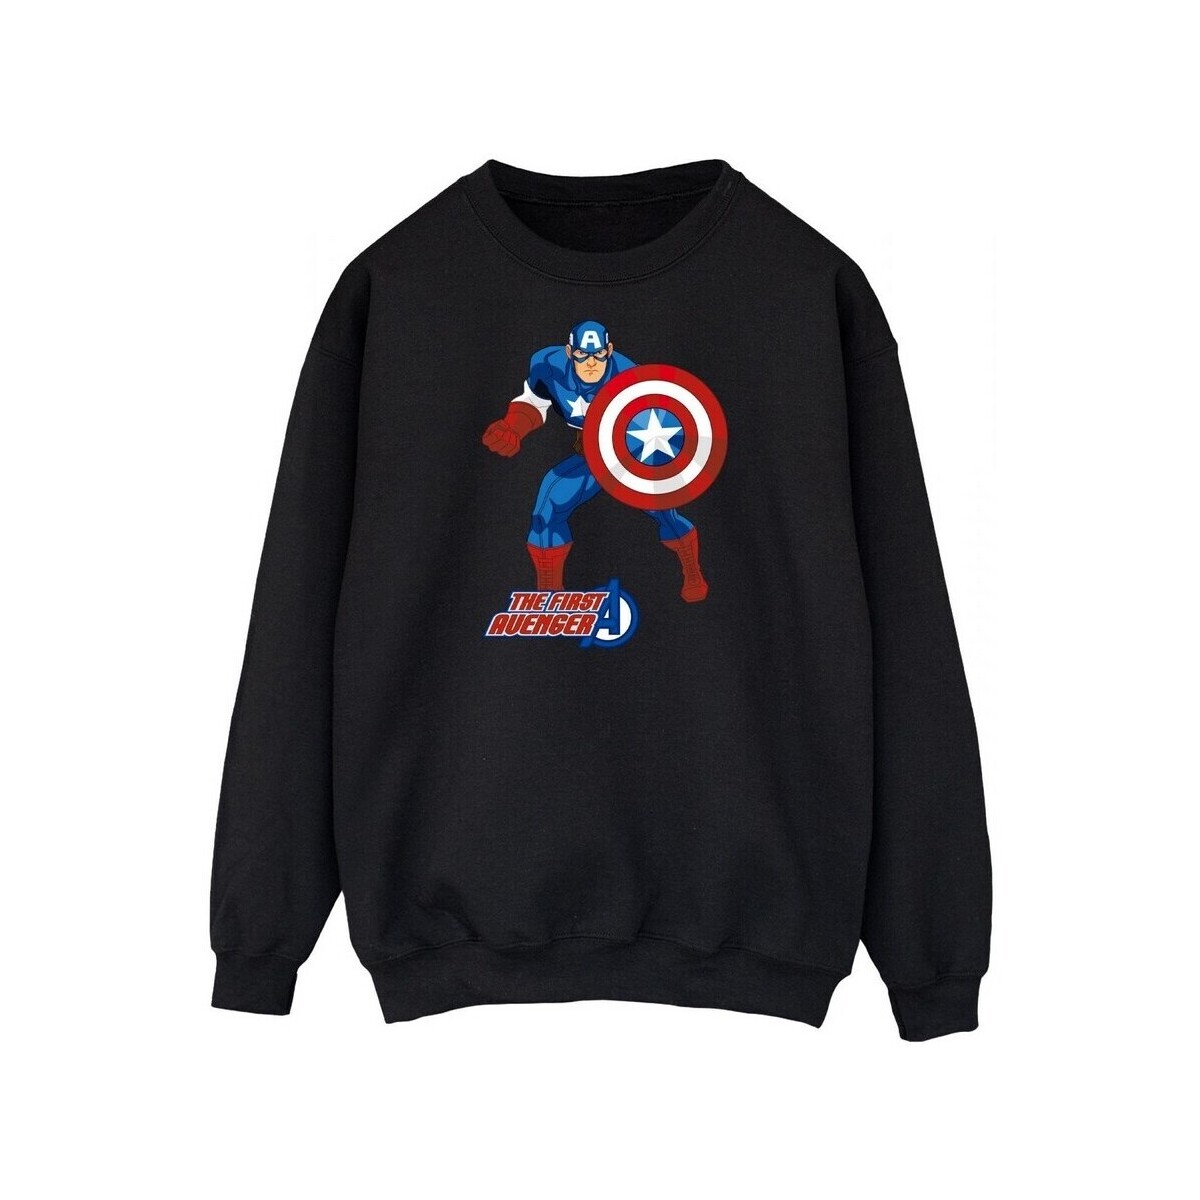 Vêtements Sweats Captain America The First Avenger Noir